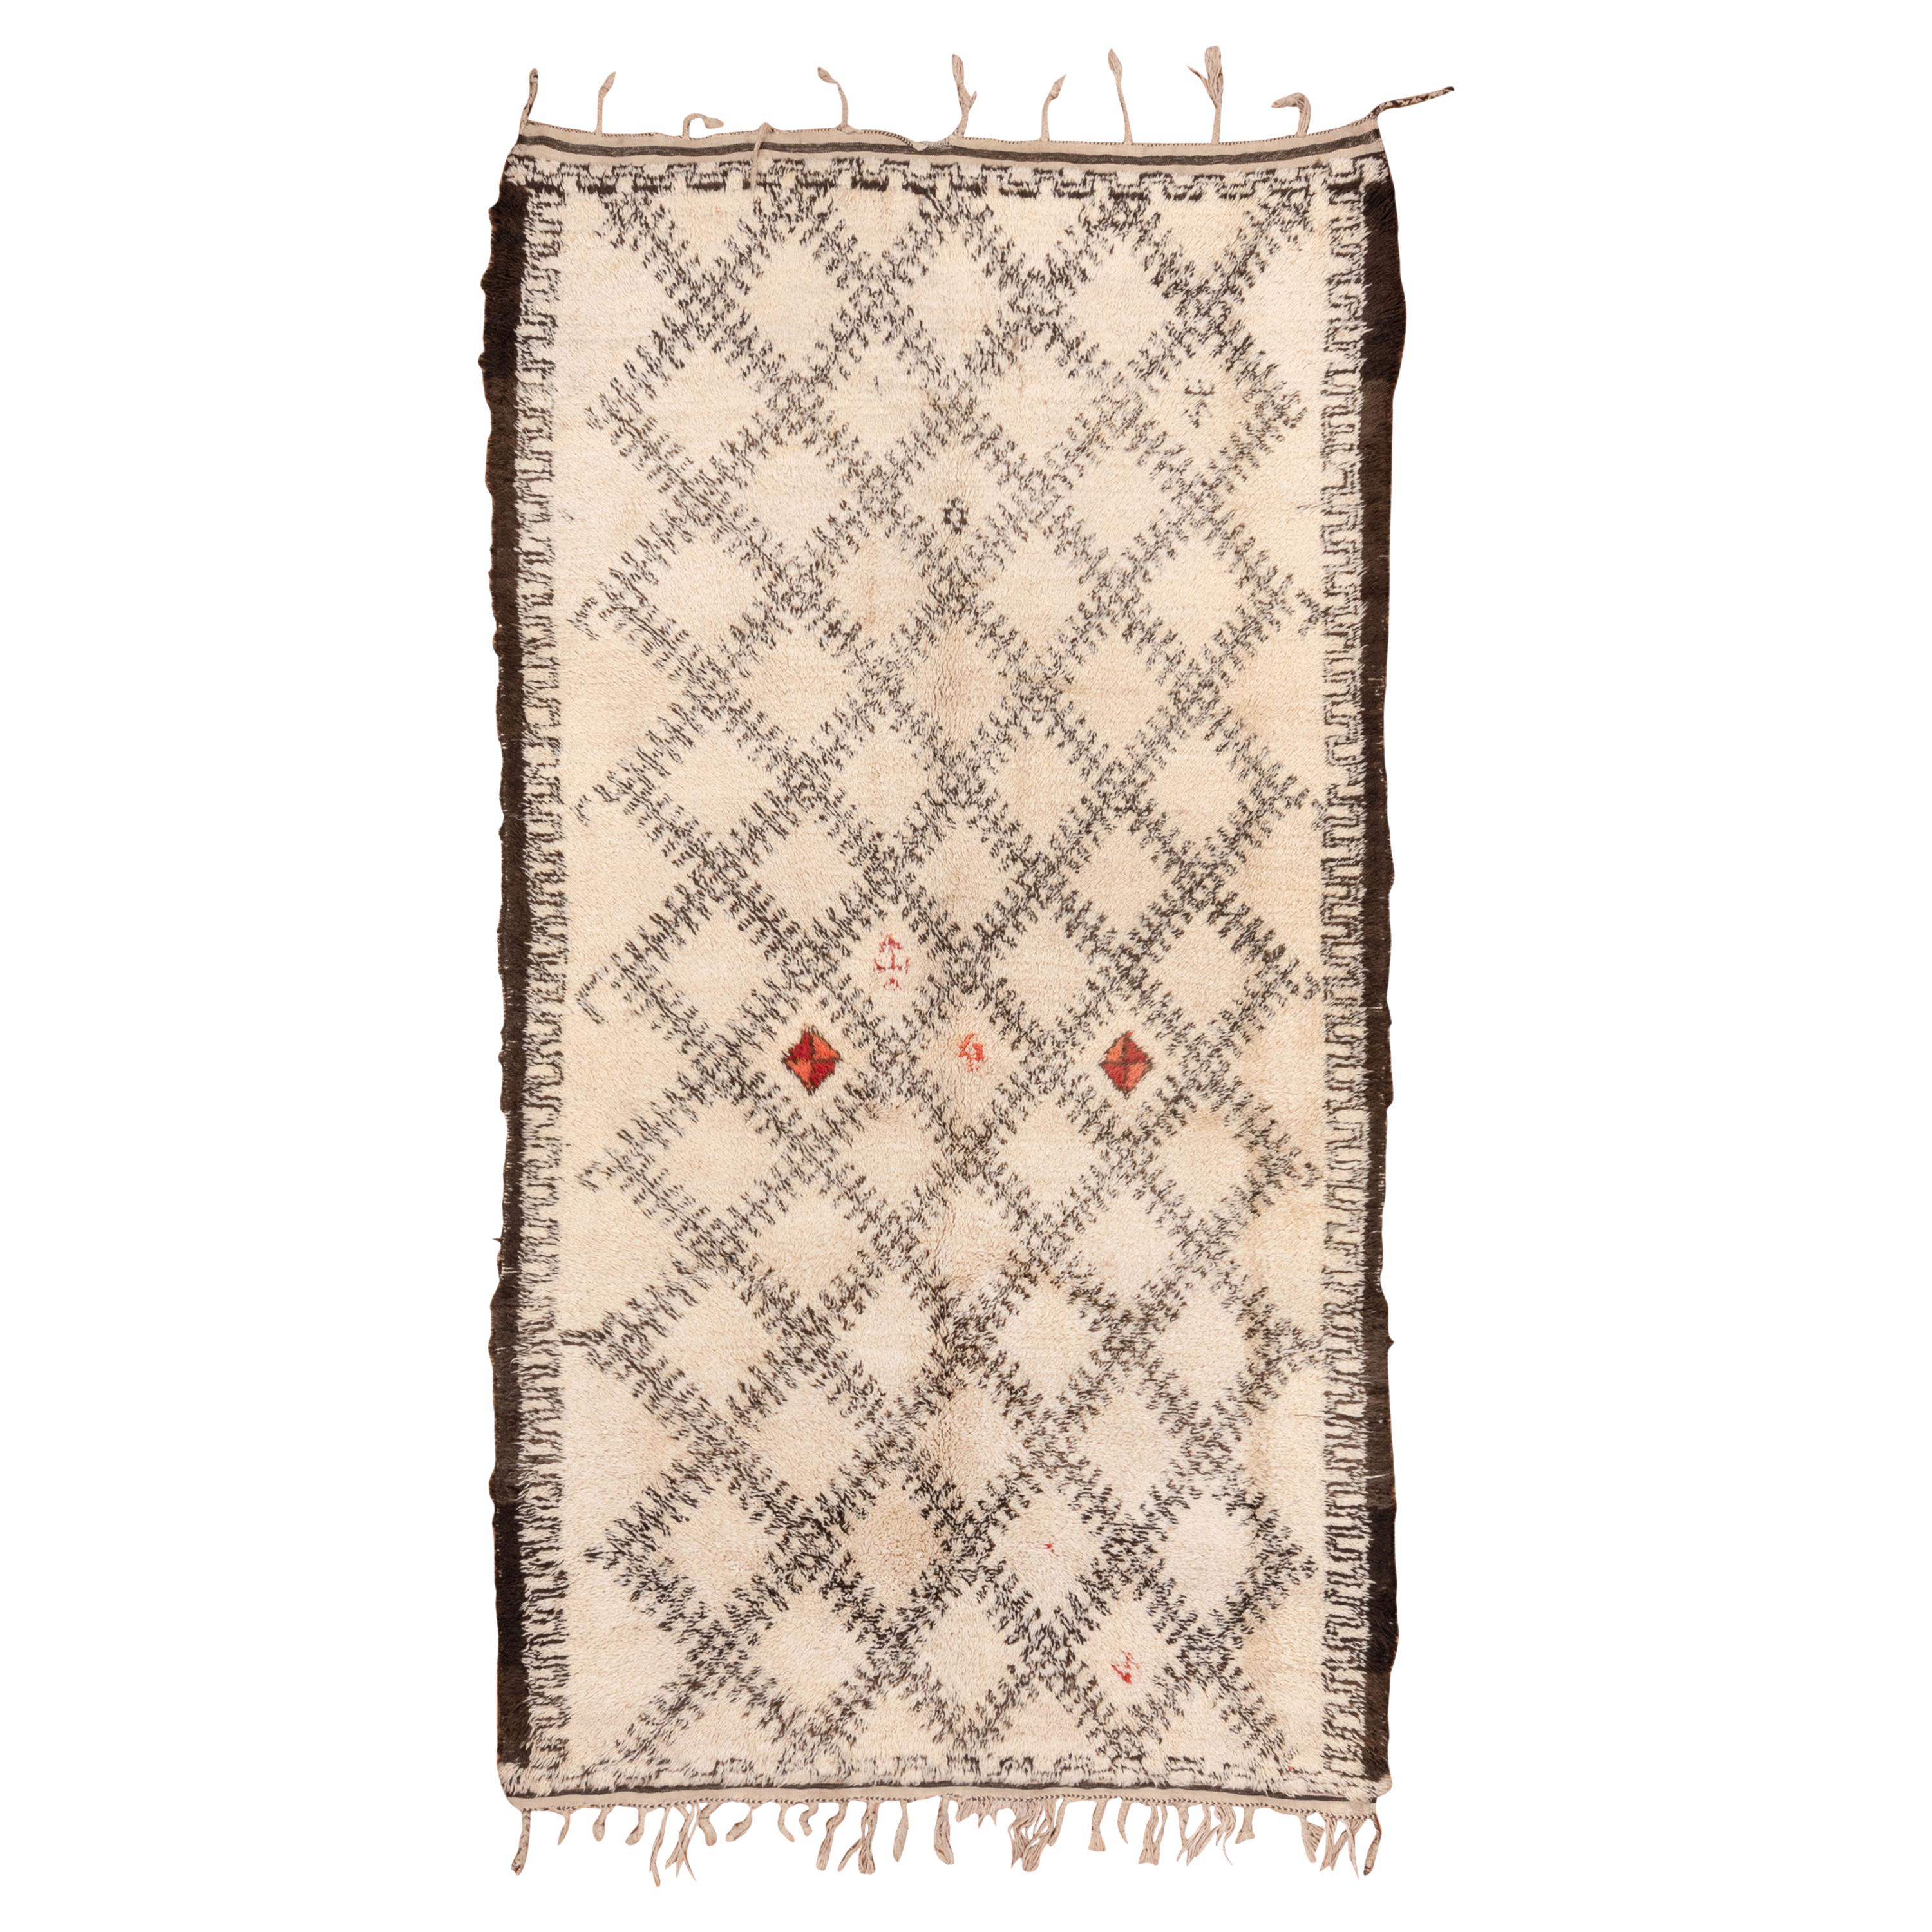 Tribal Moroccan Carpet, circa 1950s